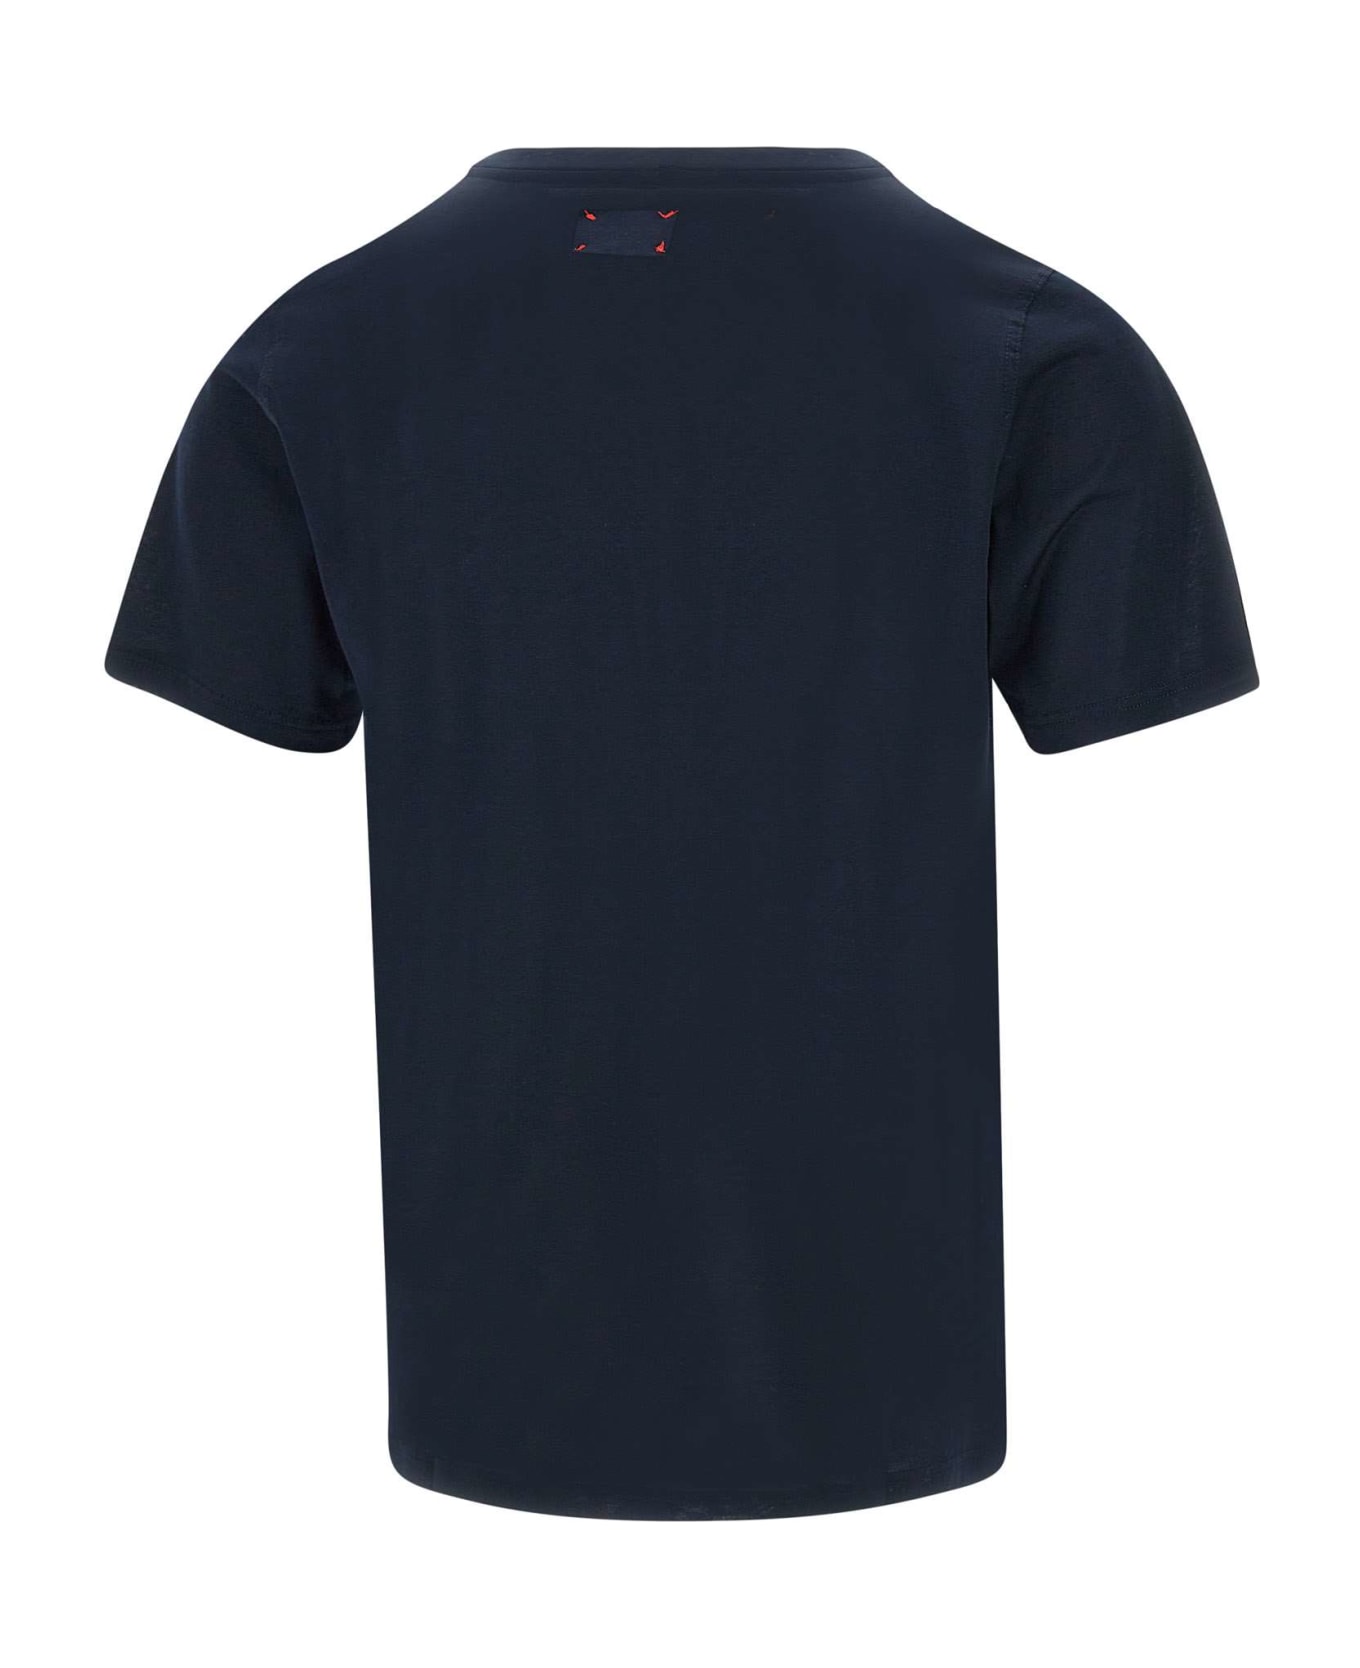 Kiton Cotton T-shirt - BLUE シャツ